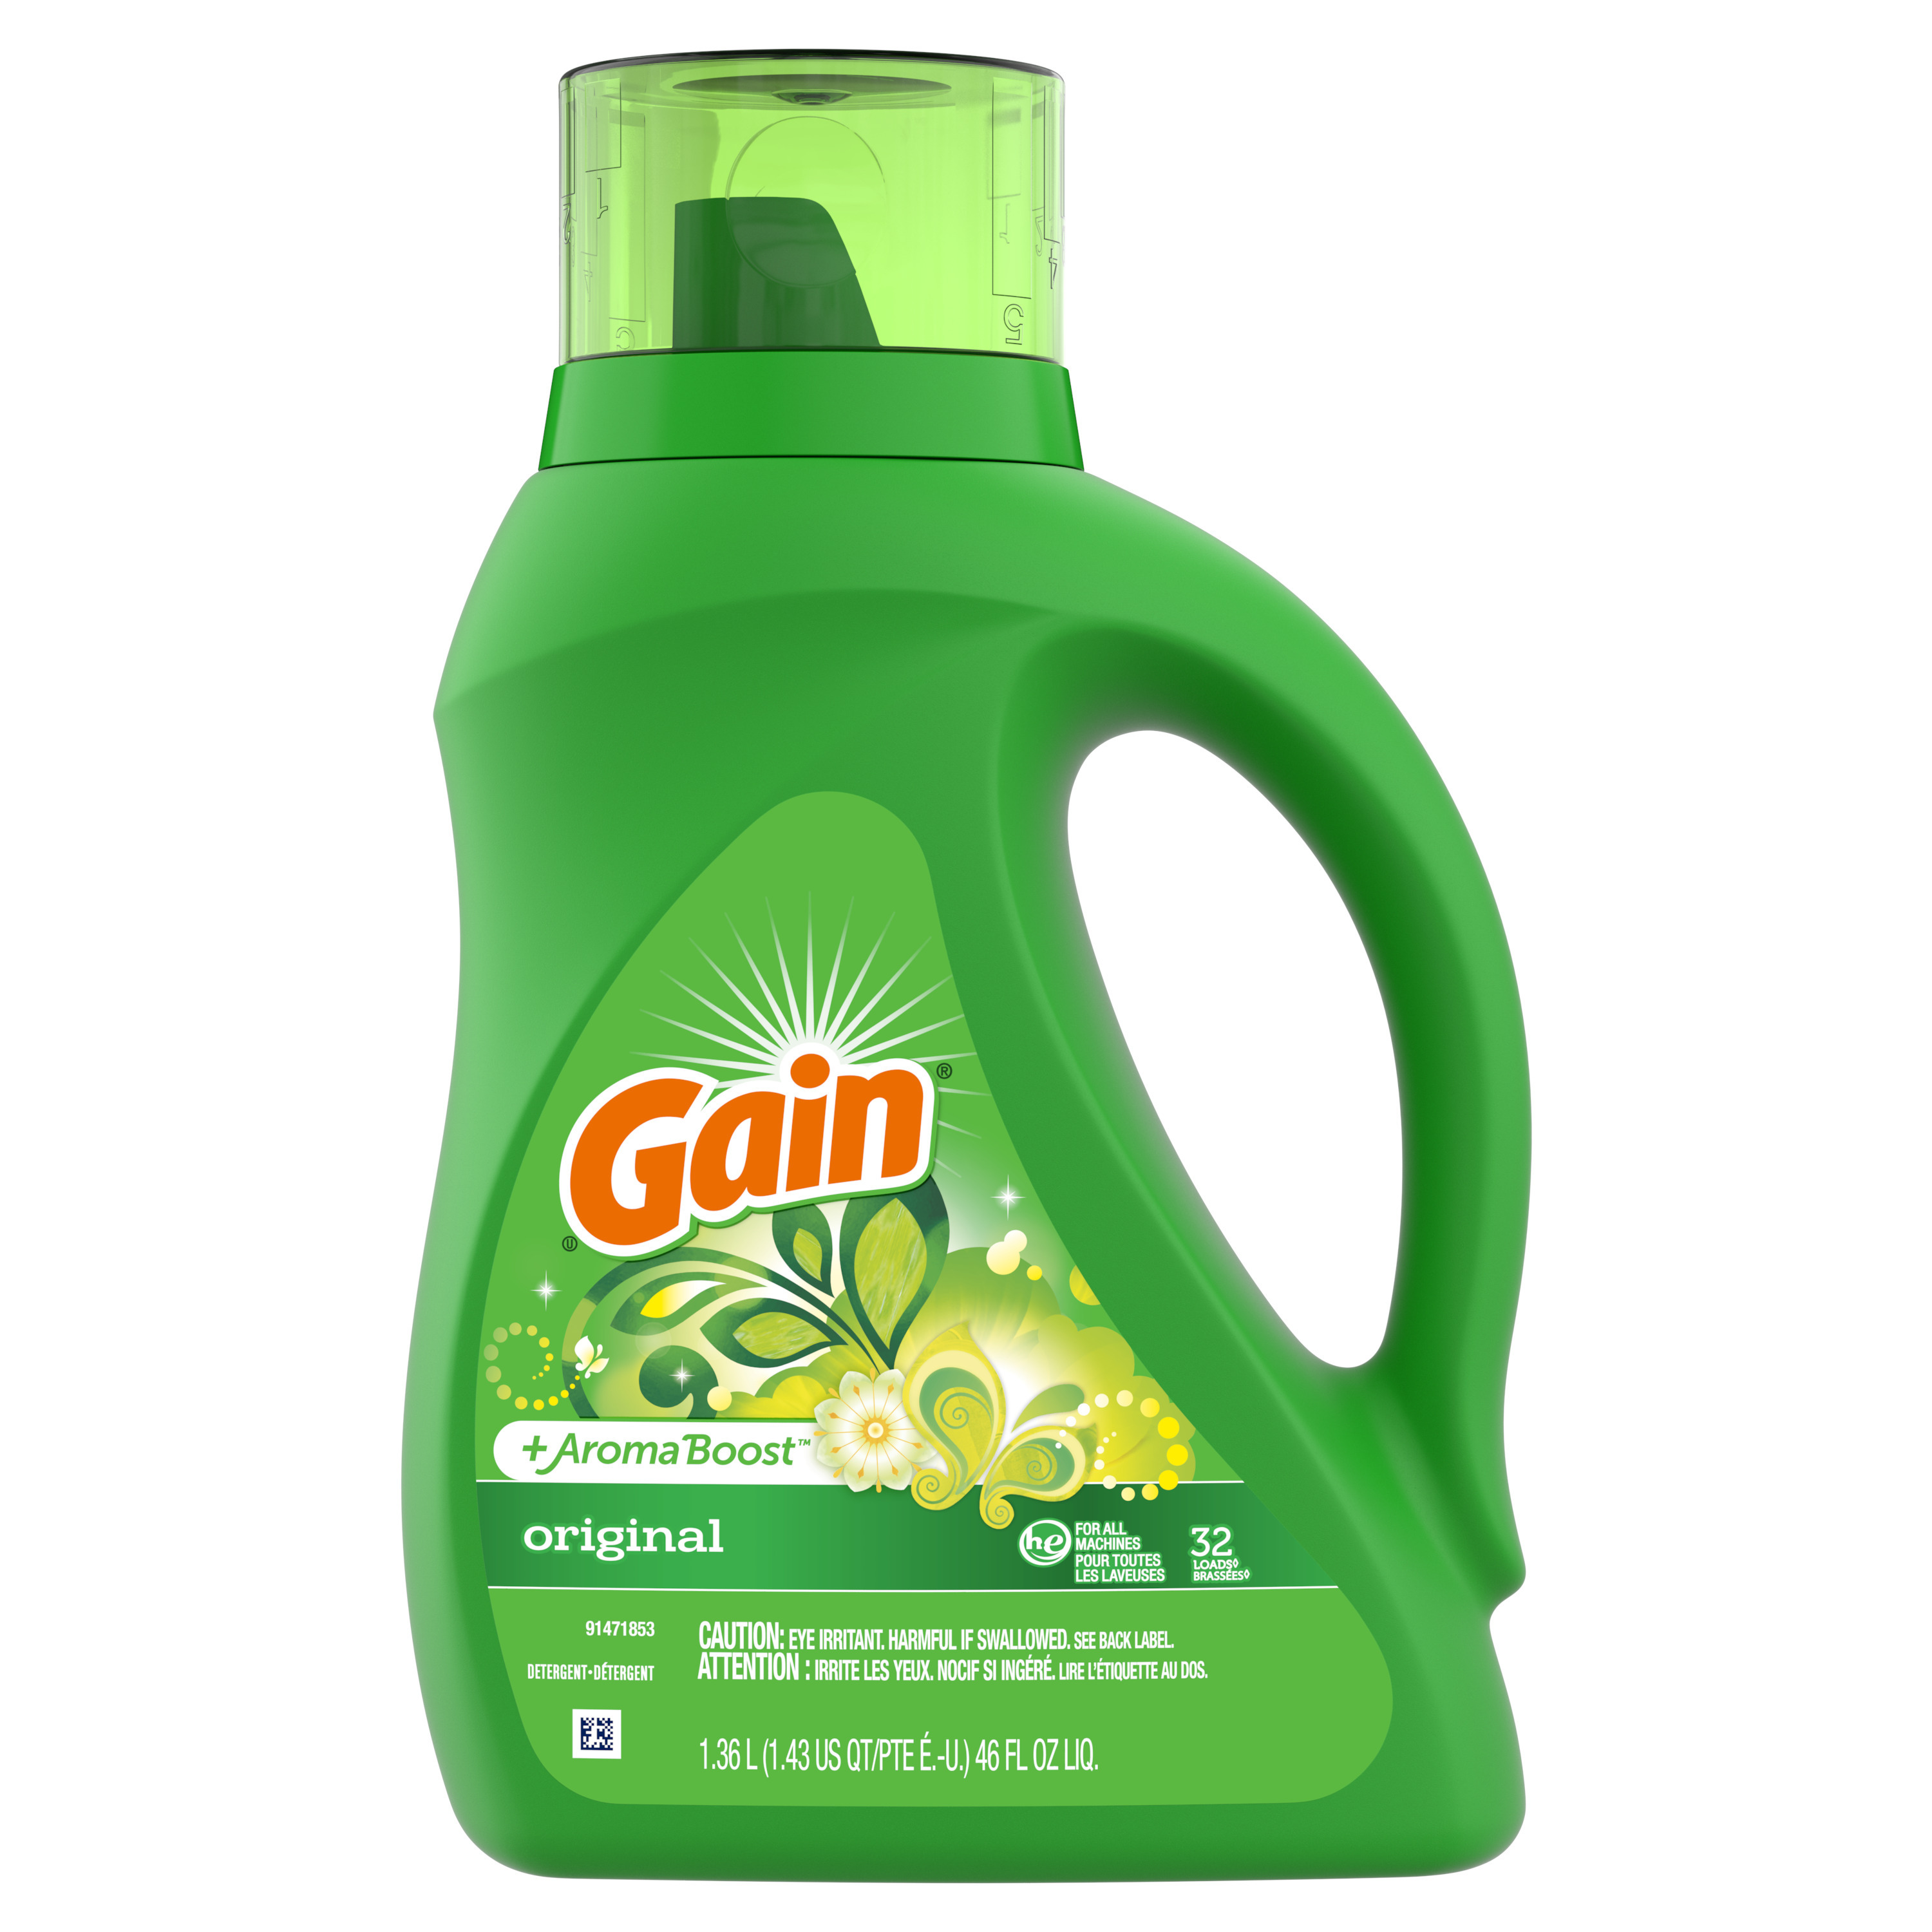 Gain + Aroma Boost Liquid Laundry Detergent, Original Scent, 32 Loads, 46 fl oz, HE Compatible - image 8 of 8